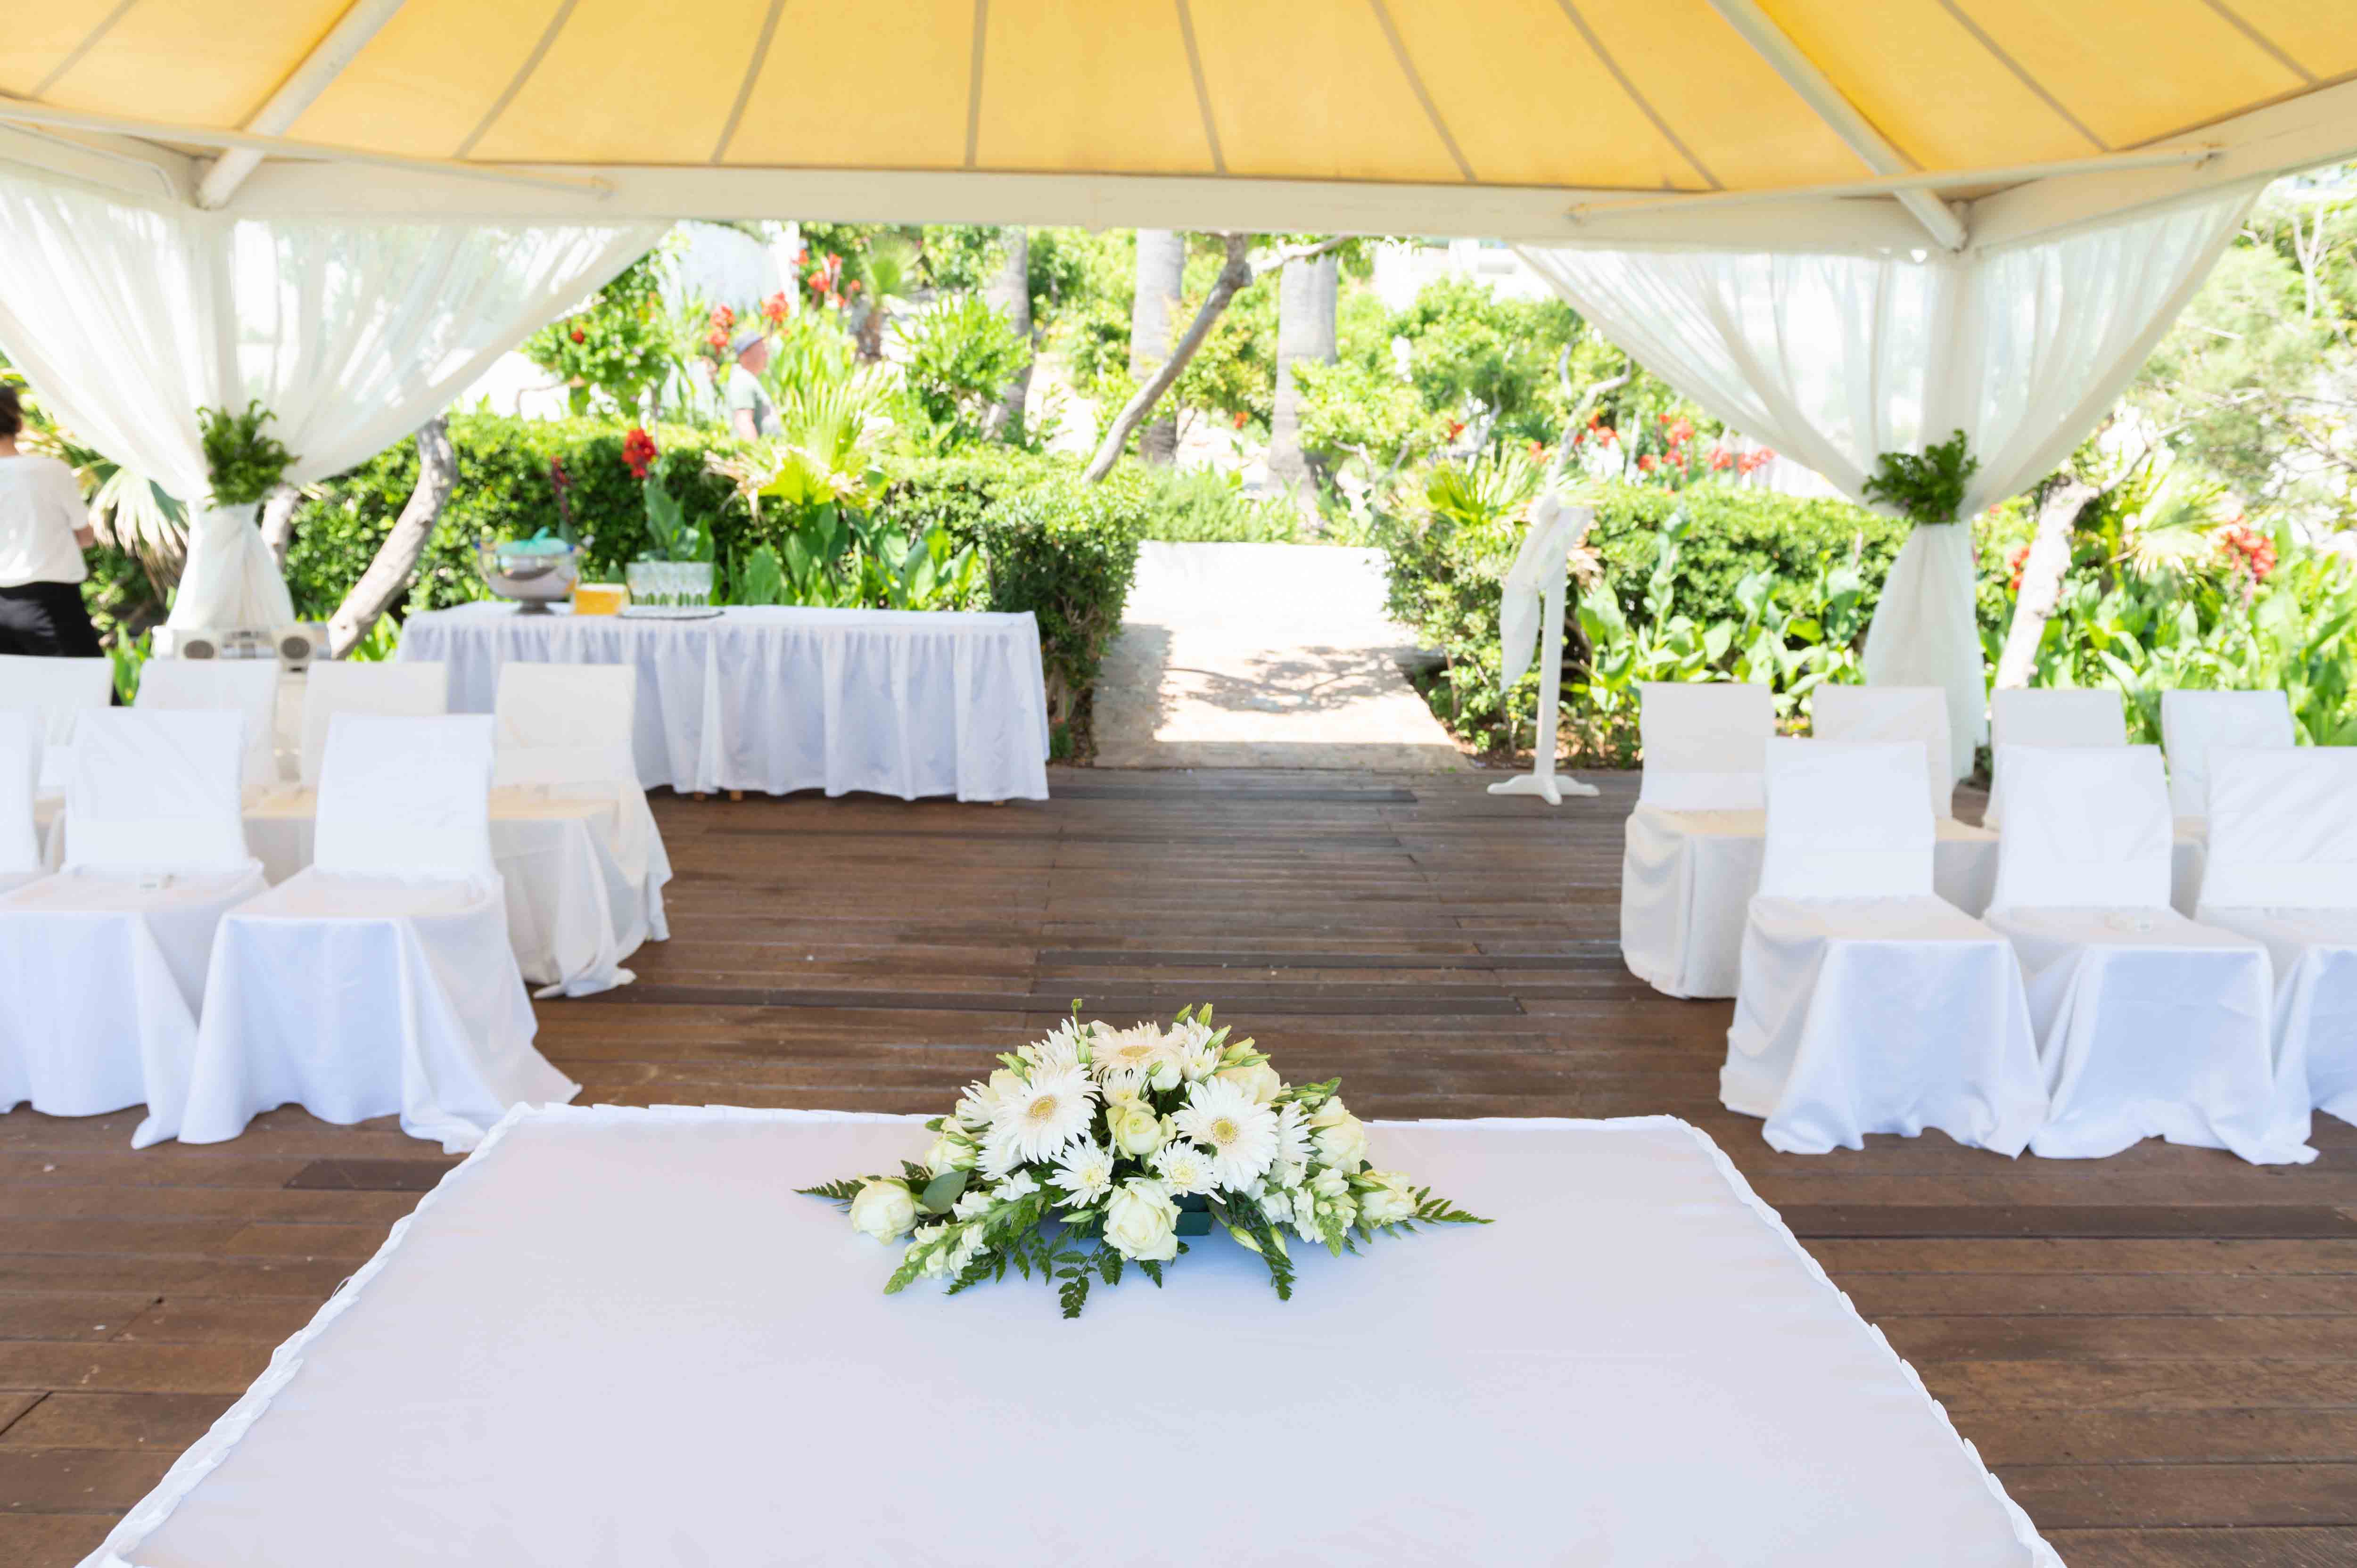 Book your wedding day in Atlantica Sungarden Beach Hotel